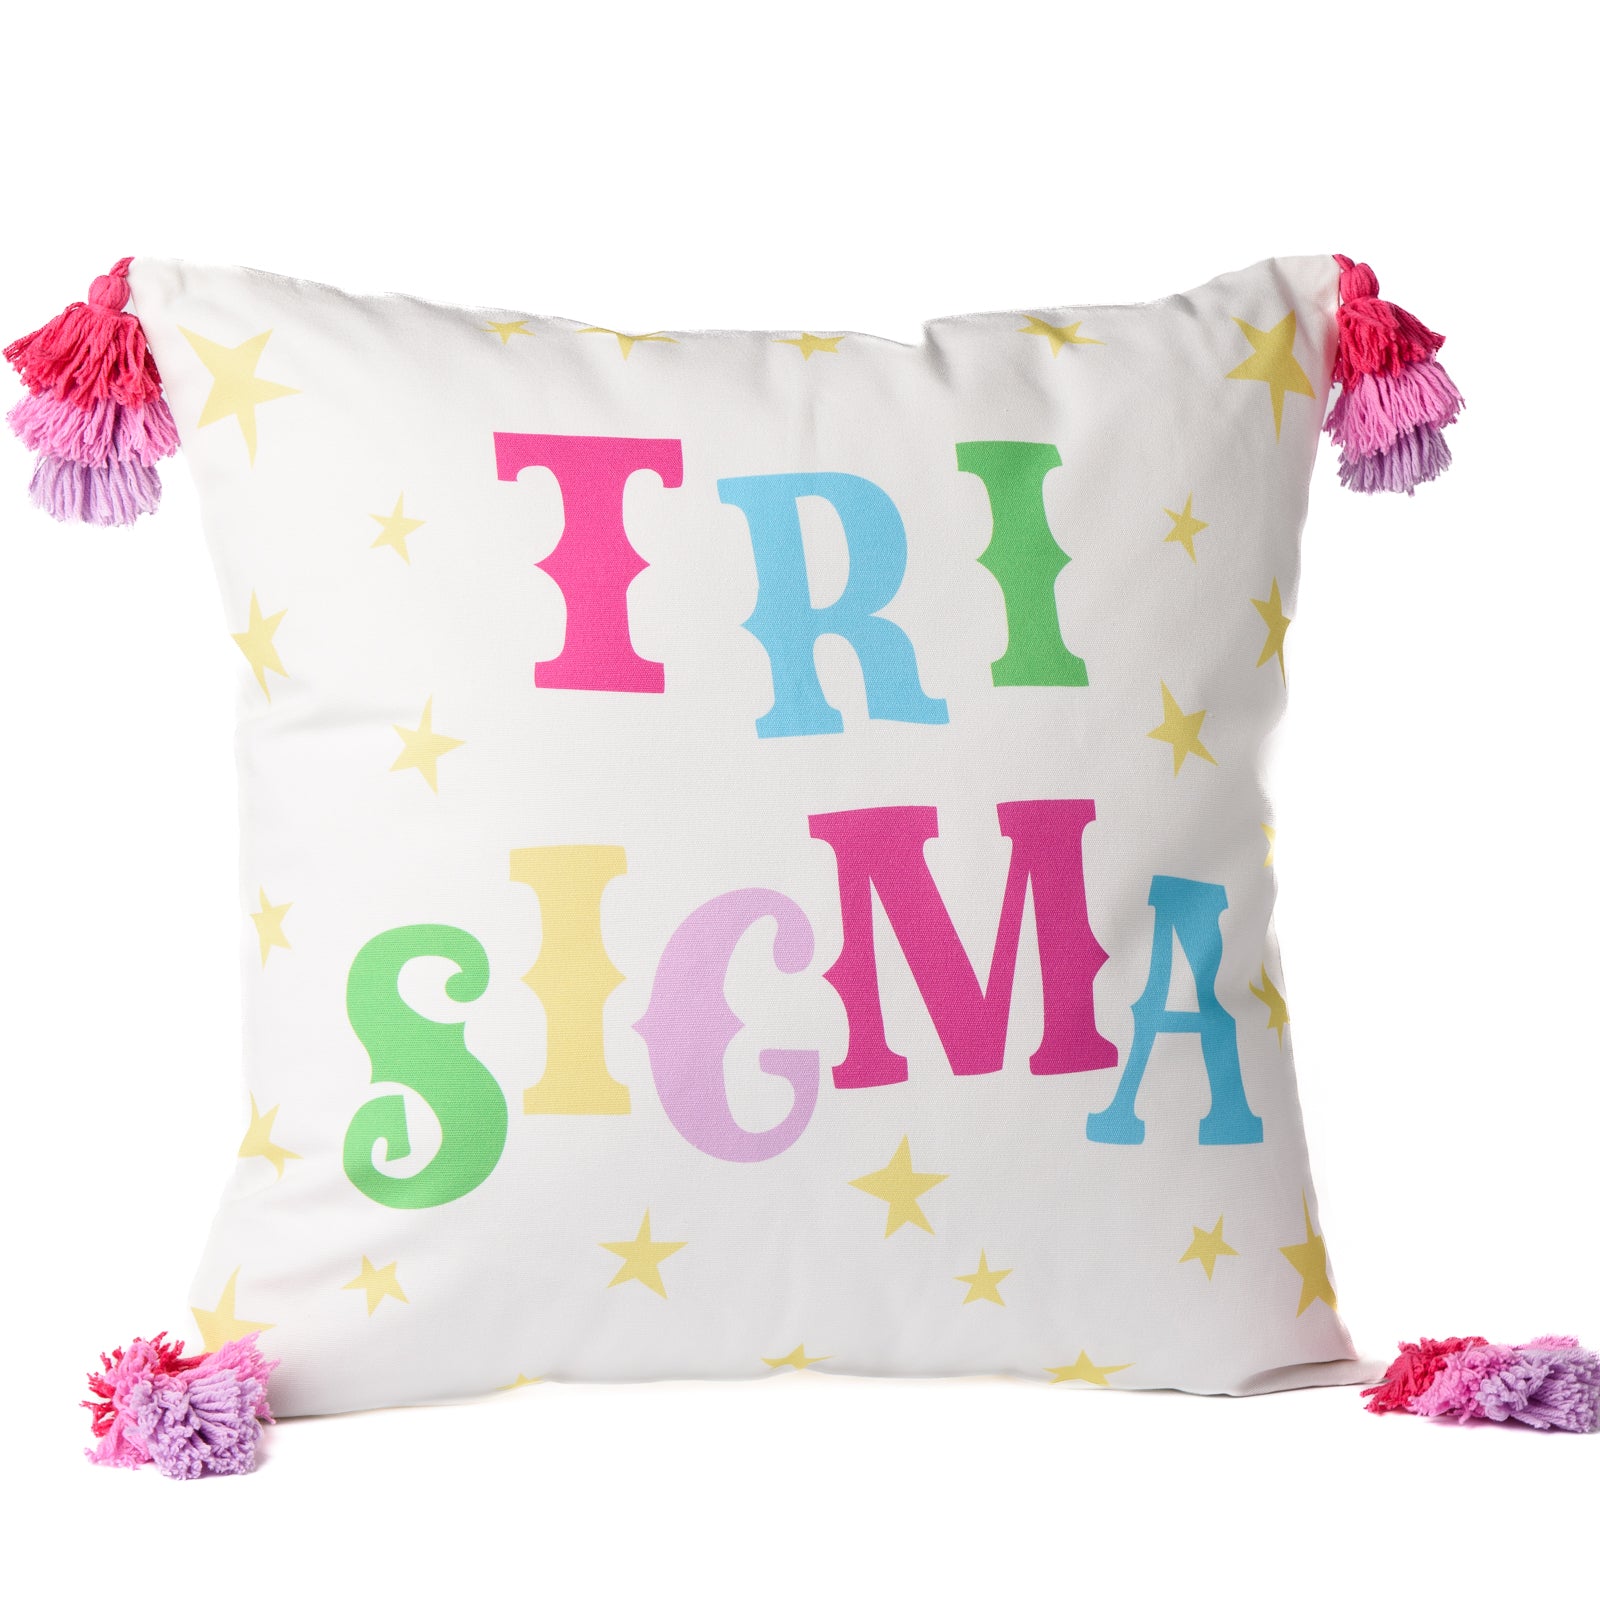 TRI SIGMA "Oh My Stars" Printed Pillow